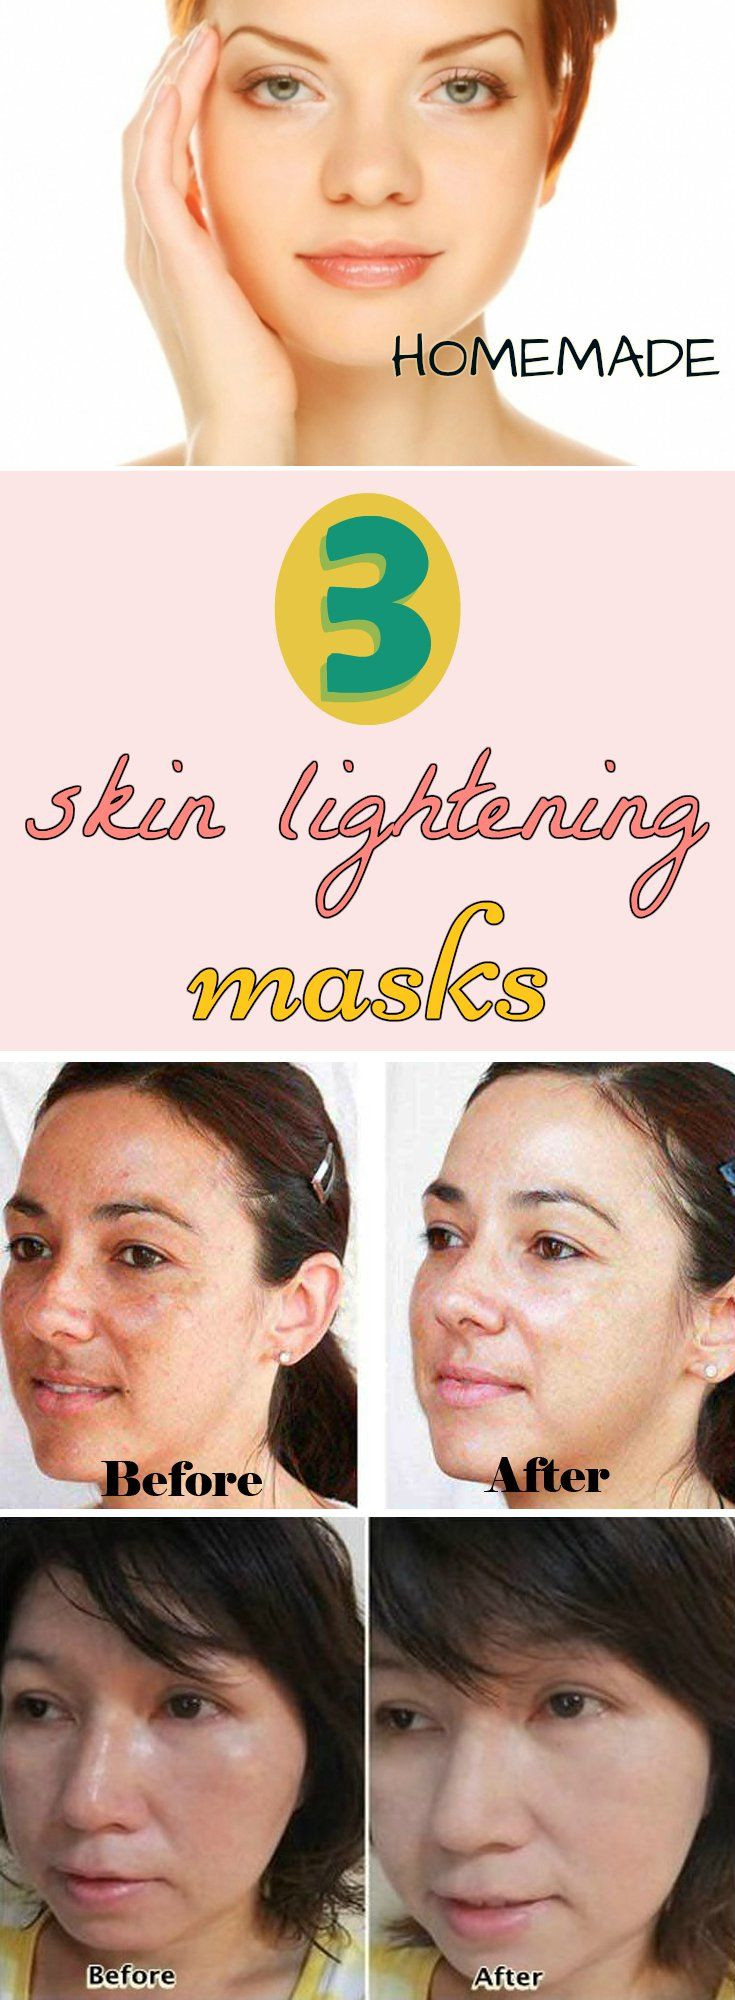 Best ideas about DIY Skin Lightening
. Save or Pin Top 254 ideas about DIY Natural Brighten Skin on Pinterest Now.